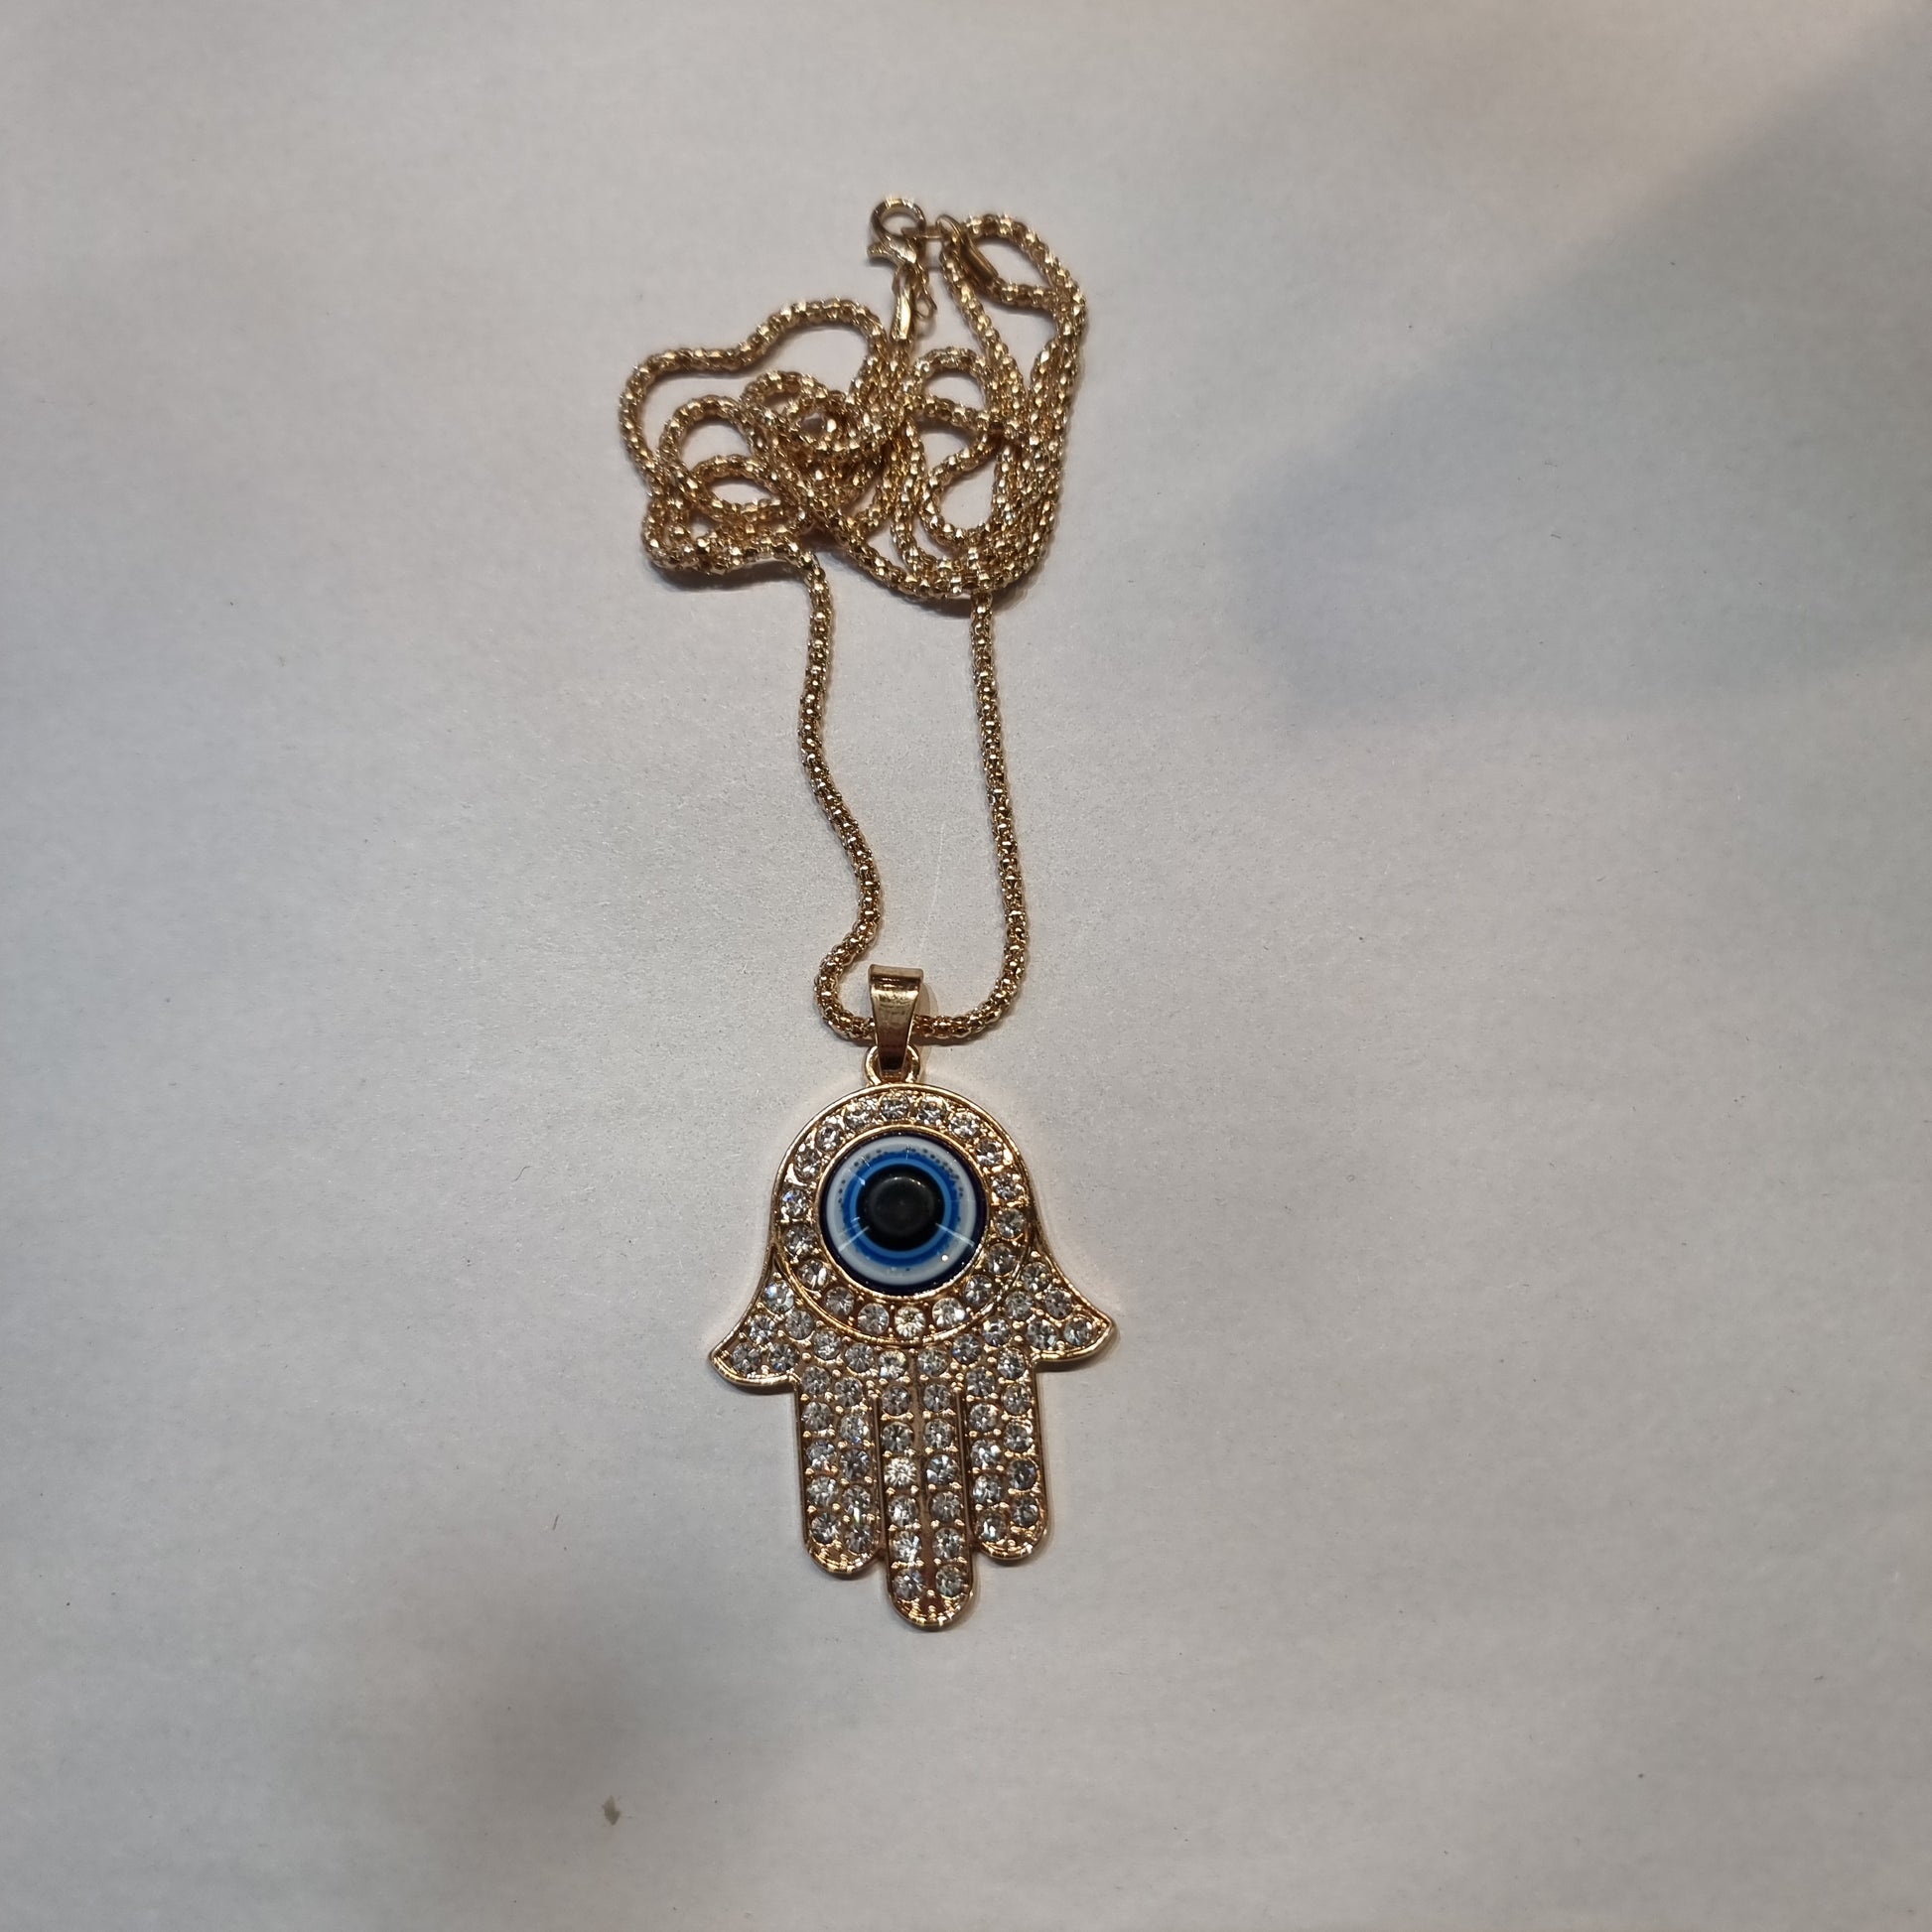 Evil eye pendants collection - Rivendell Shop